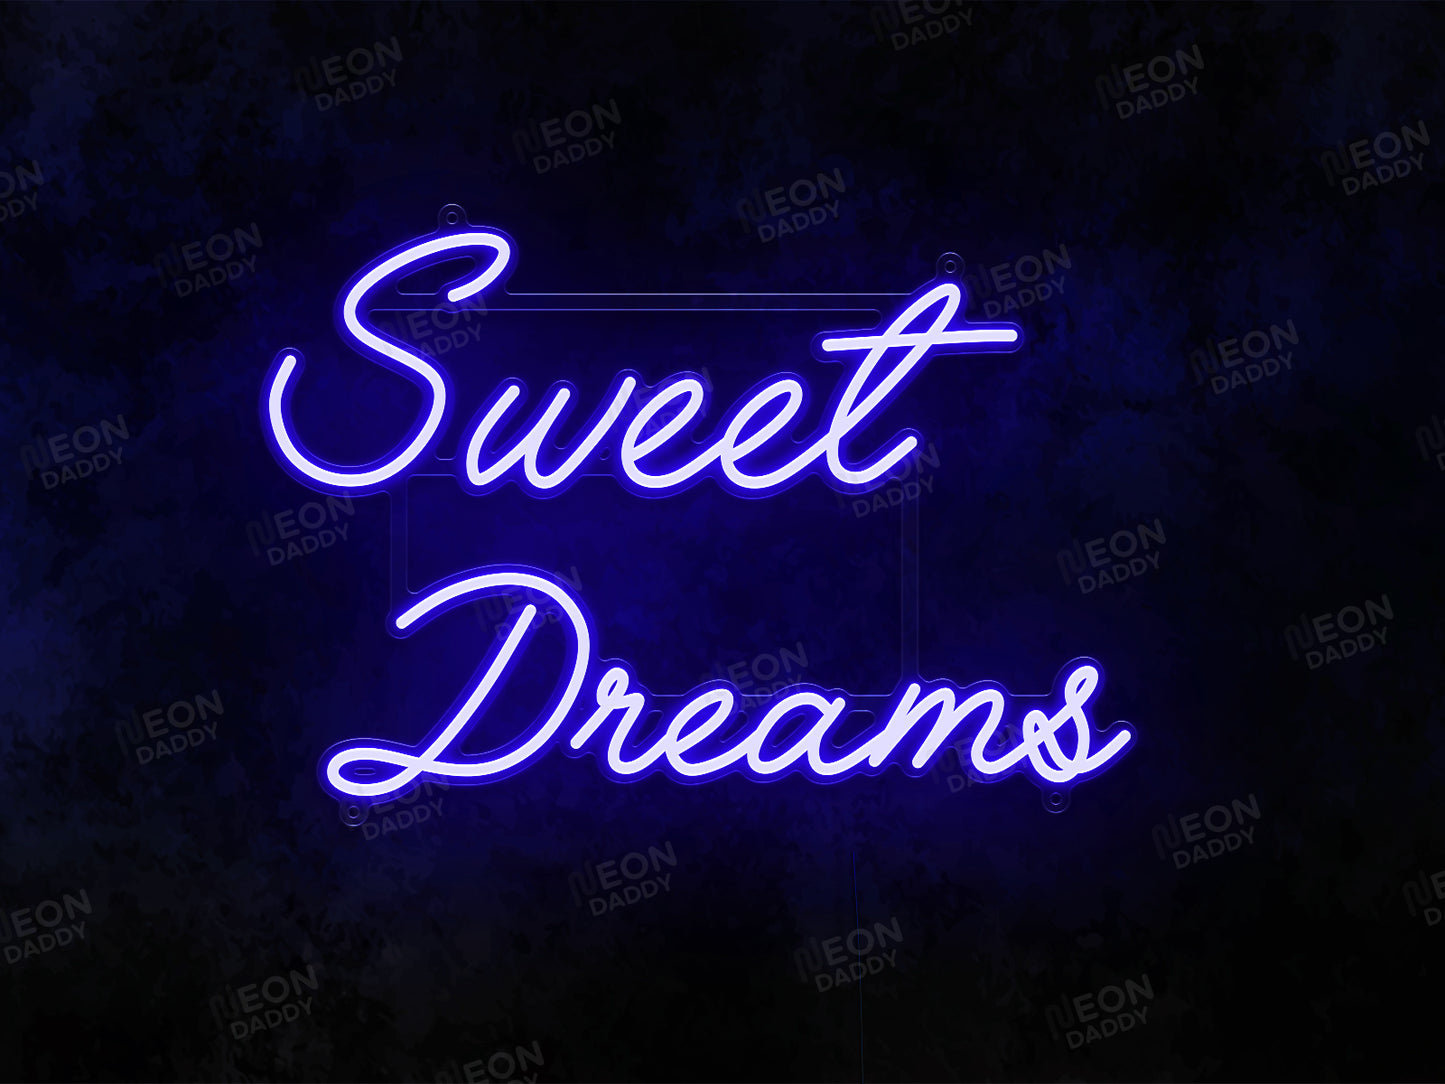 lrcj_personal@outlook.com - SWEET DREAMS - 600 x 390 mm - DEEP BLUE - CUT TO LETTER